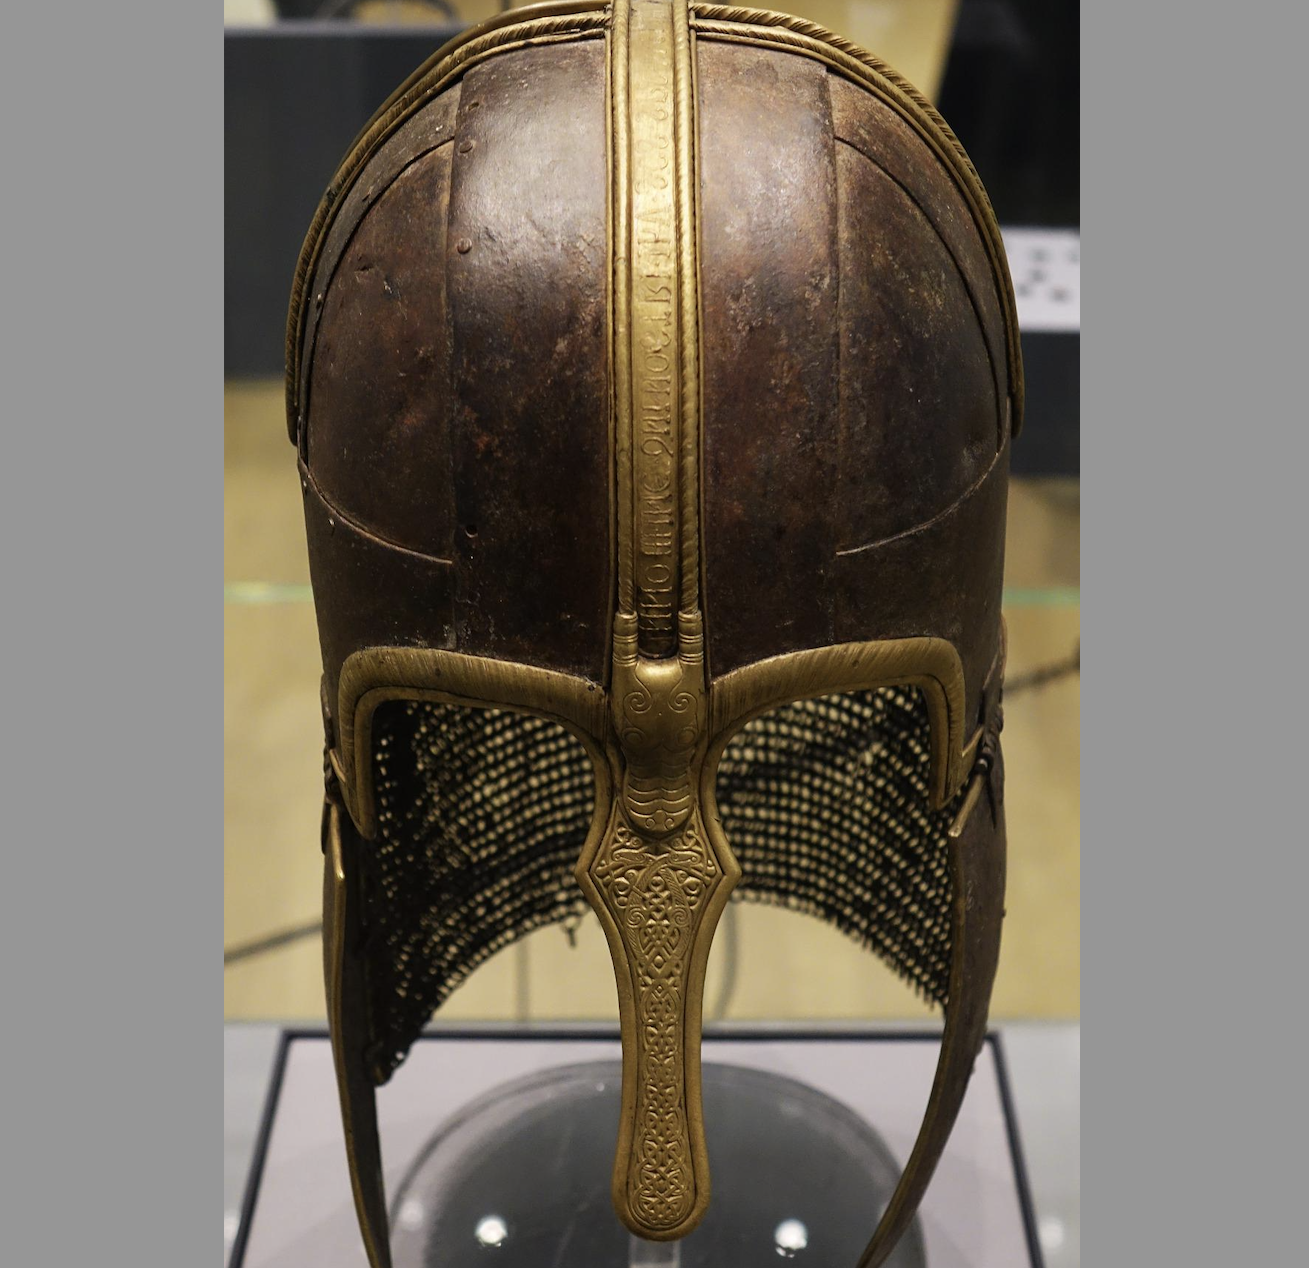 Historical Helmet Pics - helmet - www